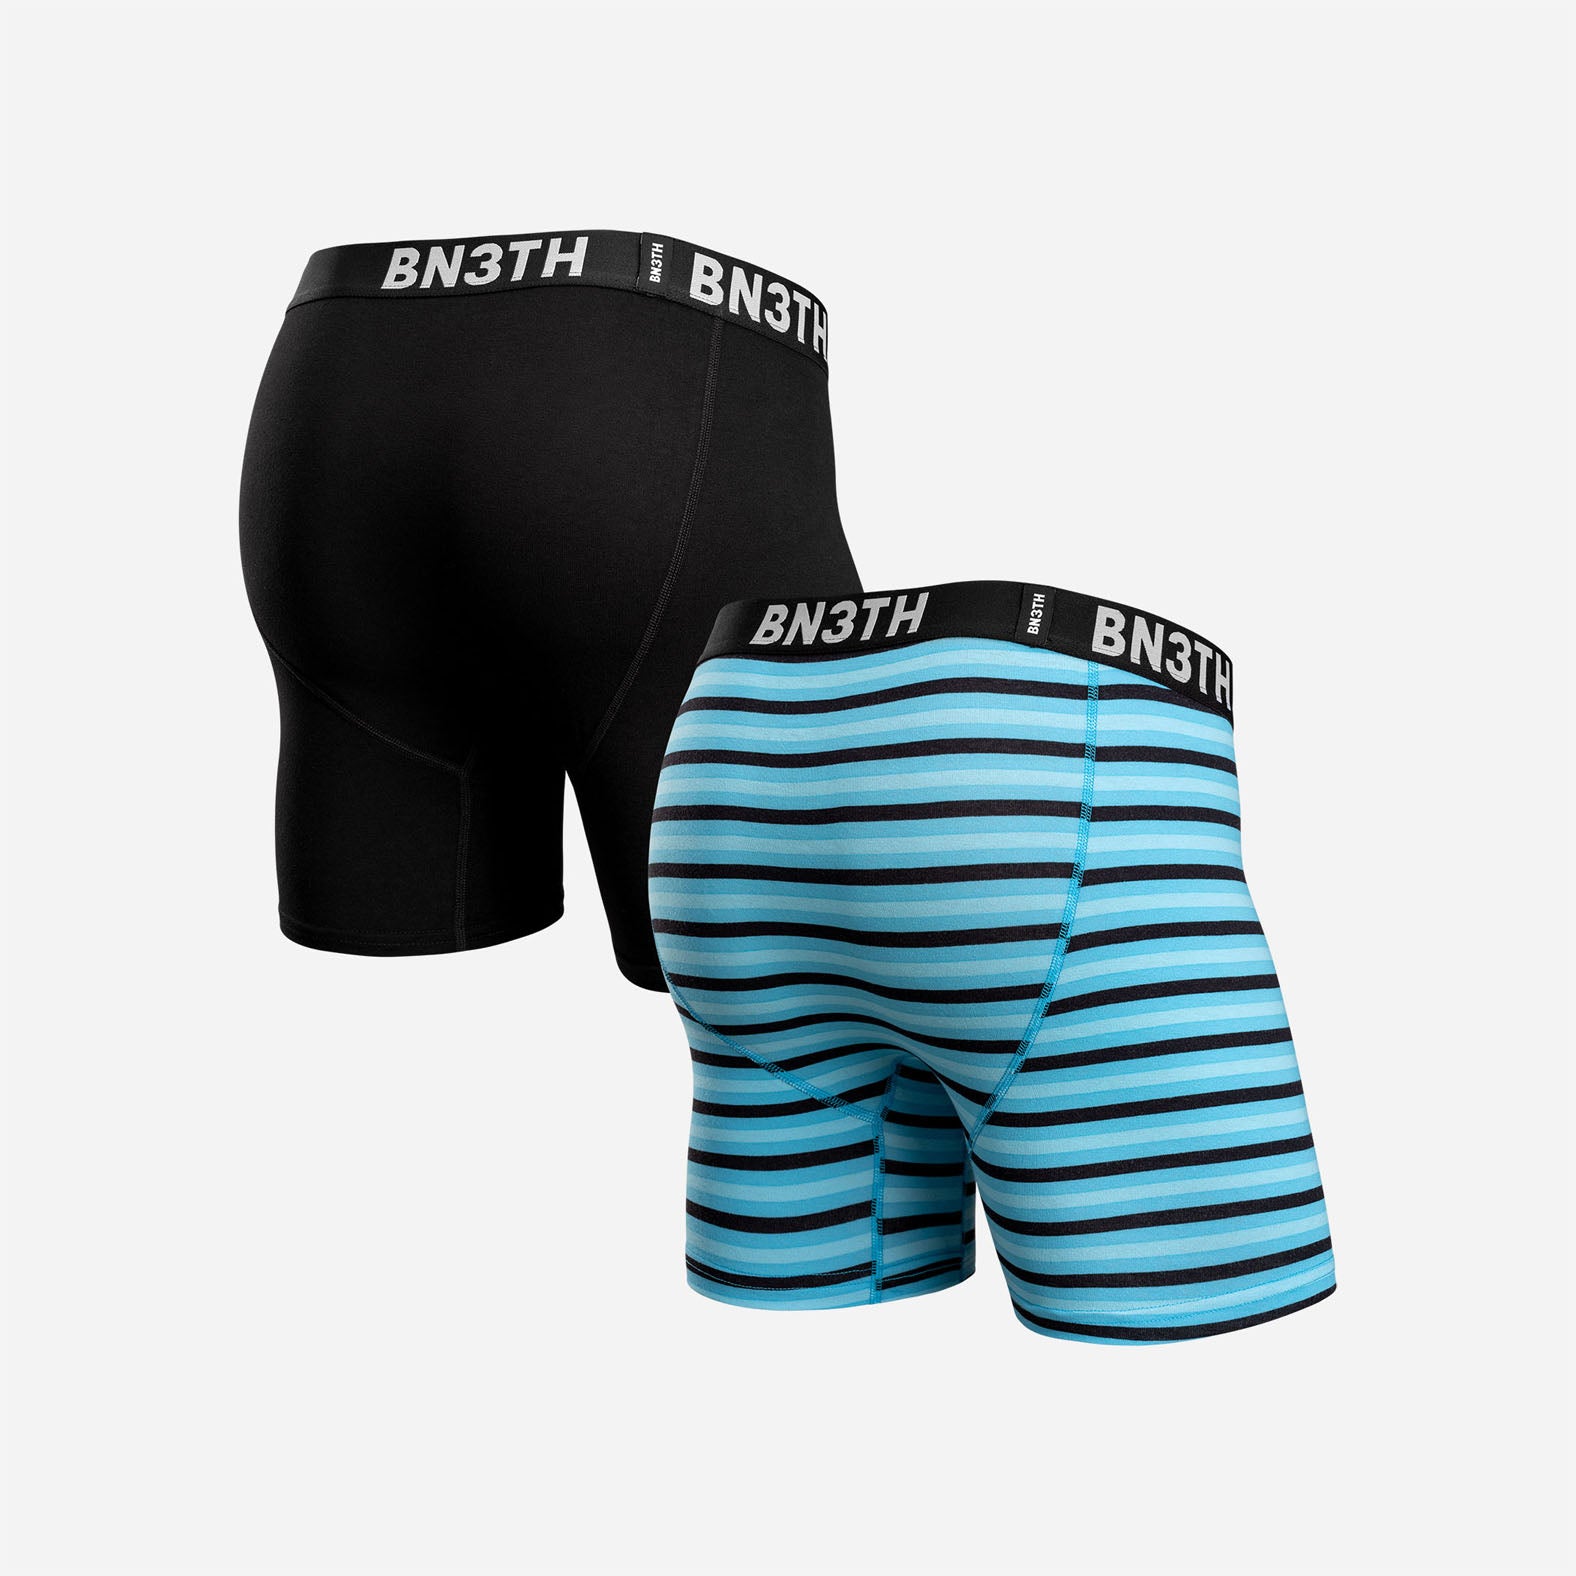 Outset Boxer Brief: Black/Mini Tricolor Stripe Turquoise 2 Pack